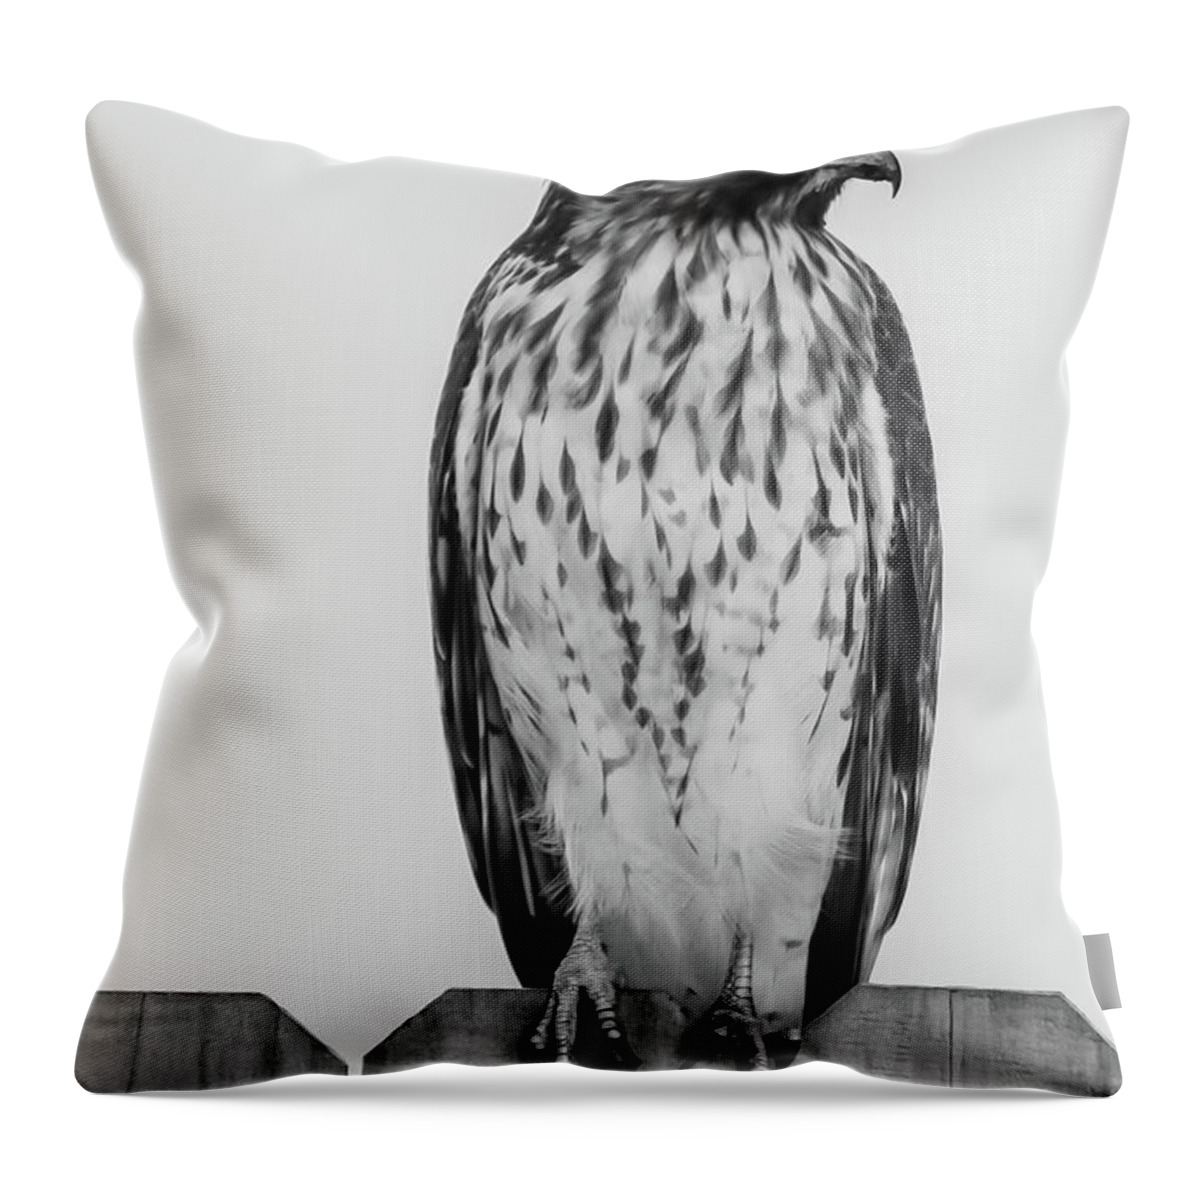 Hawk Throw Pillow featuring the photograph Hawk by Rick Redman